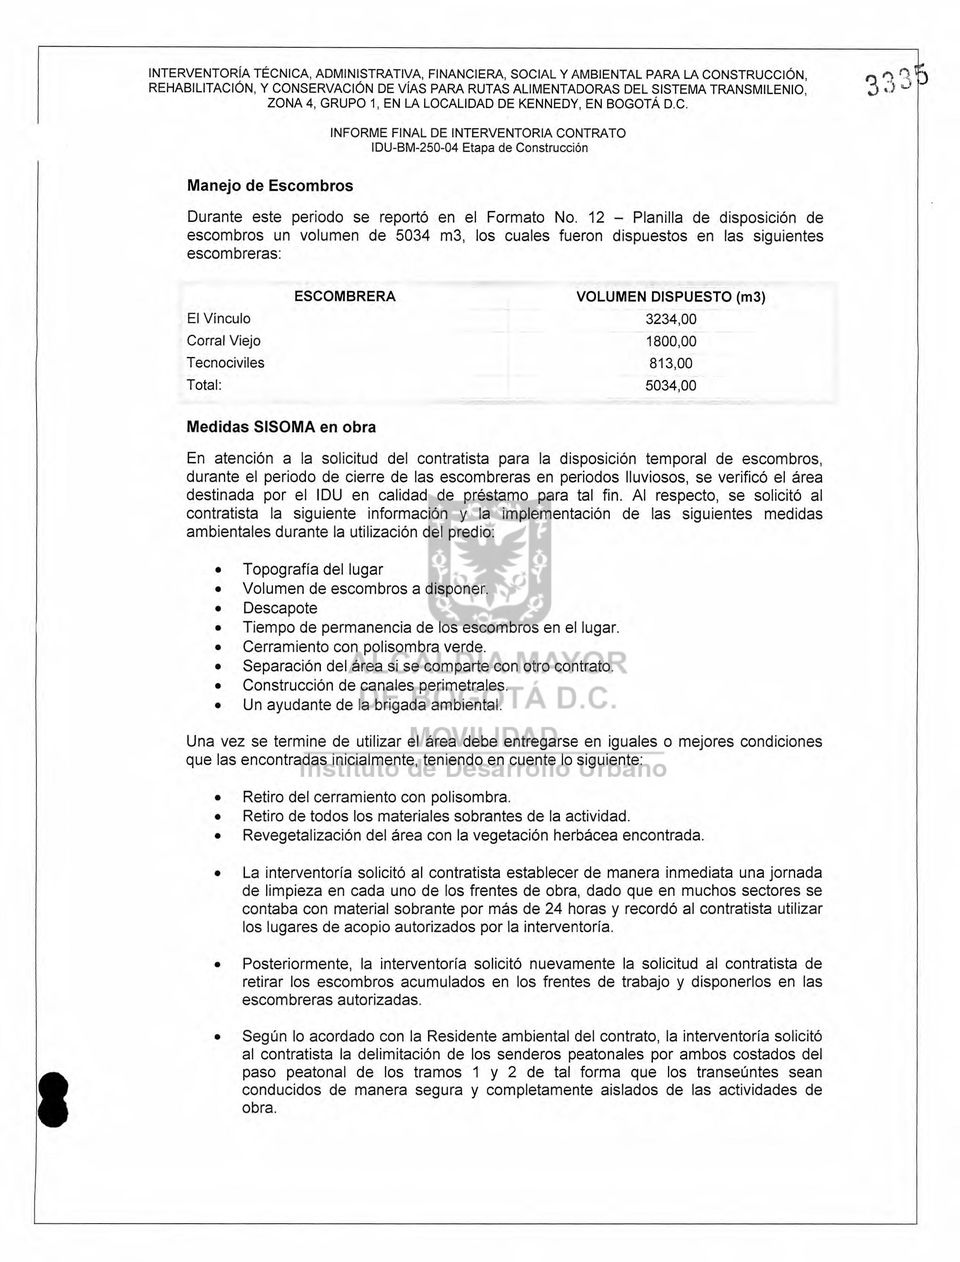 INFORME FINAL DE INTERVENTORIA CONTRATO IDU-BM Etapa de Construcción  DESCRIPCION - PDF Free Download